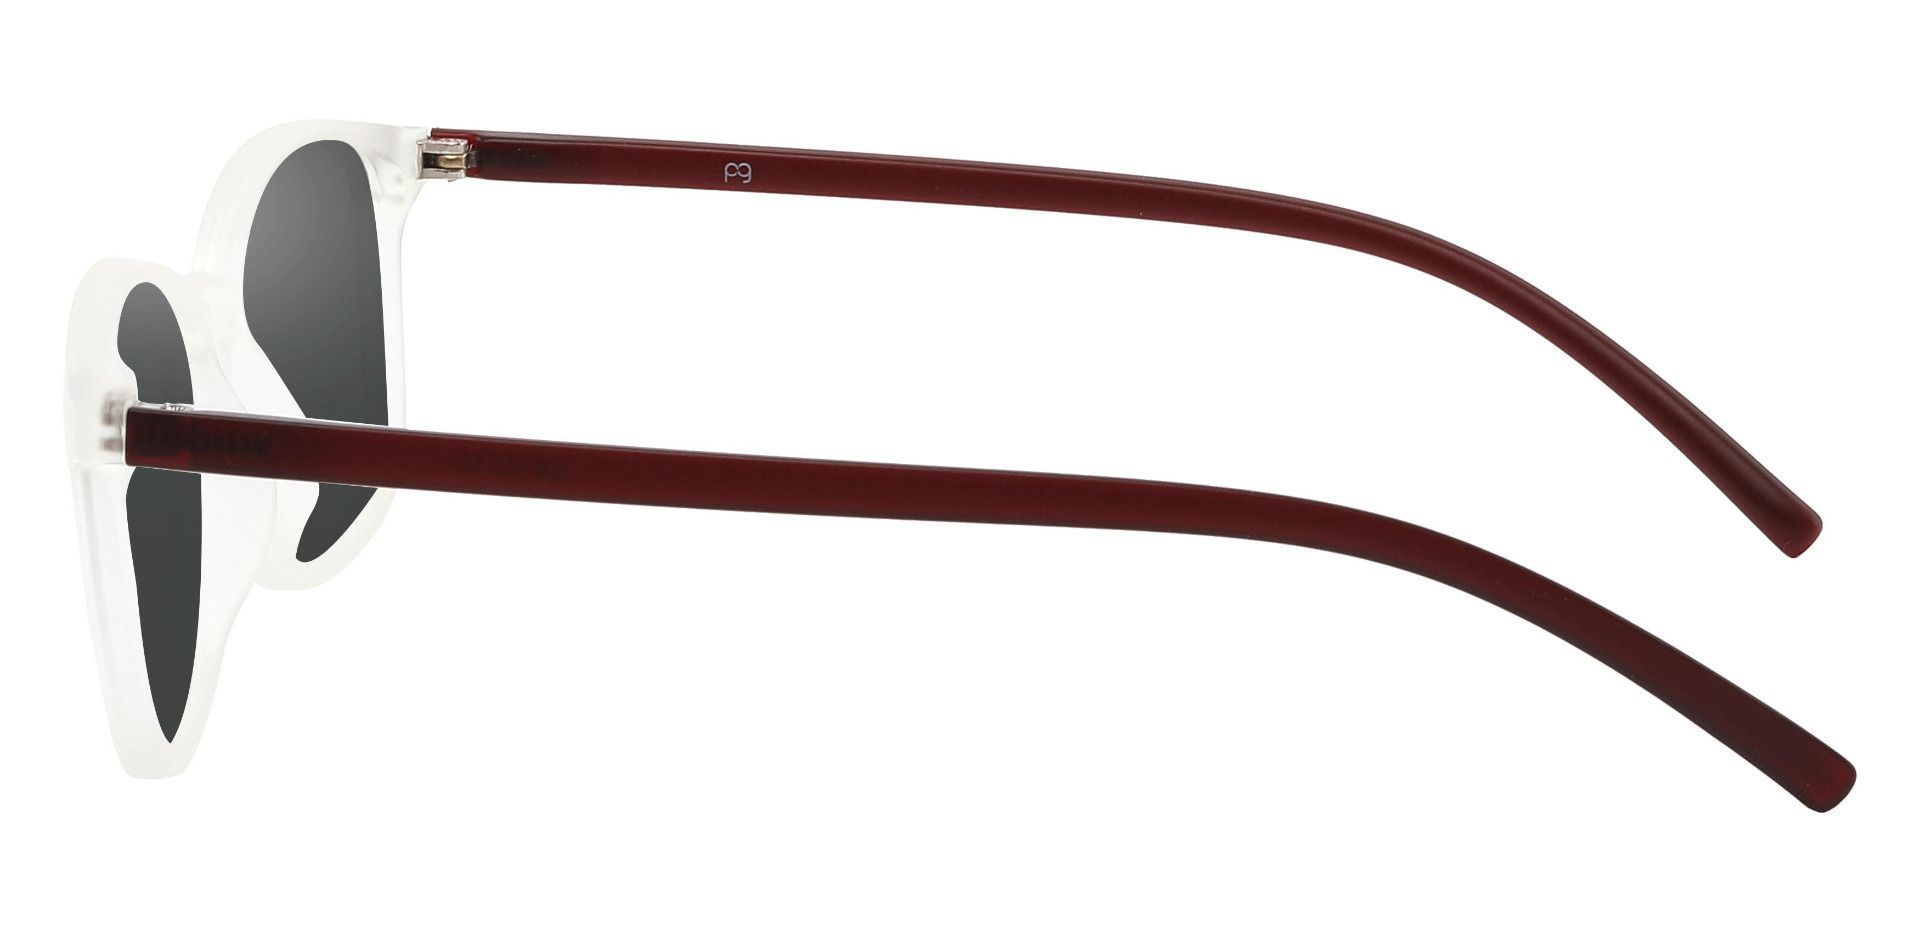 Onyx Square Progressive Sunglasses - Clear Frame With Gray Lenses